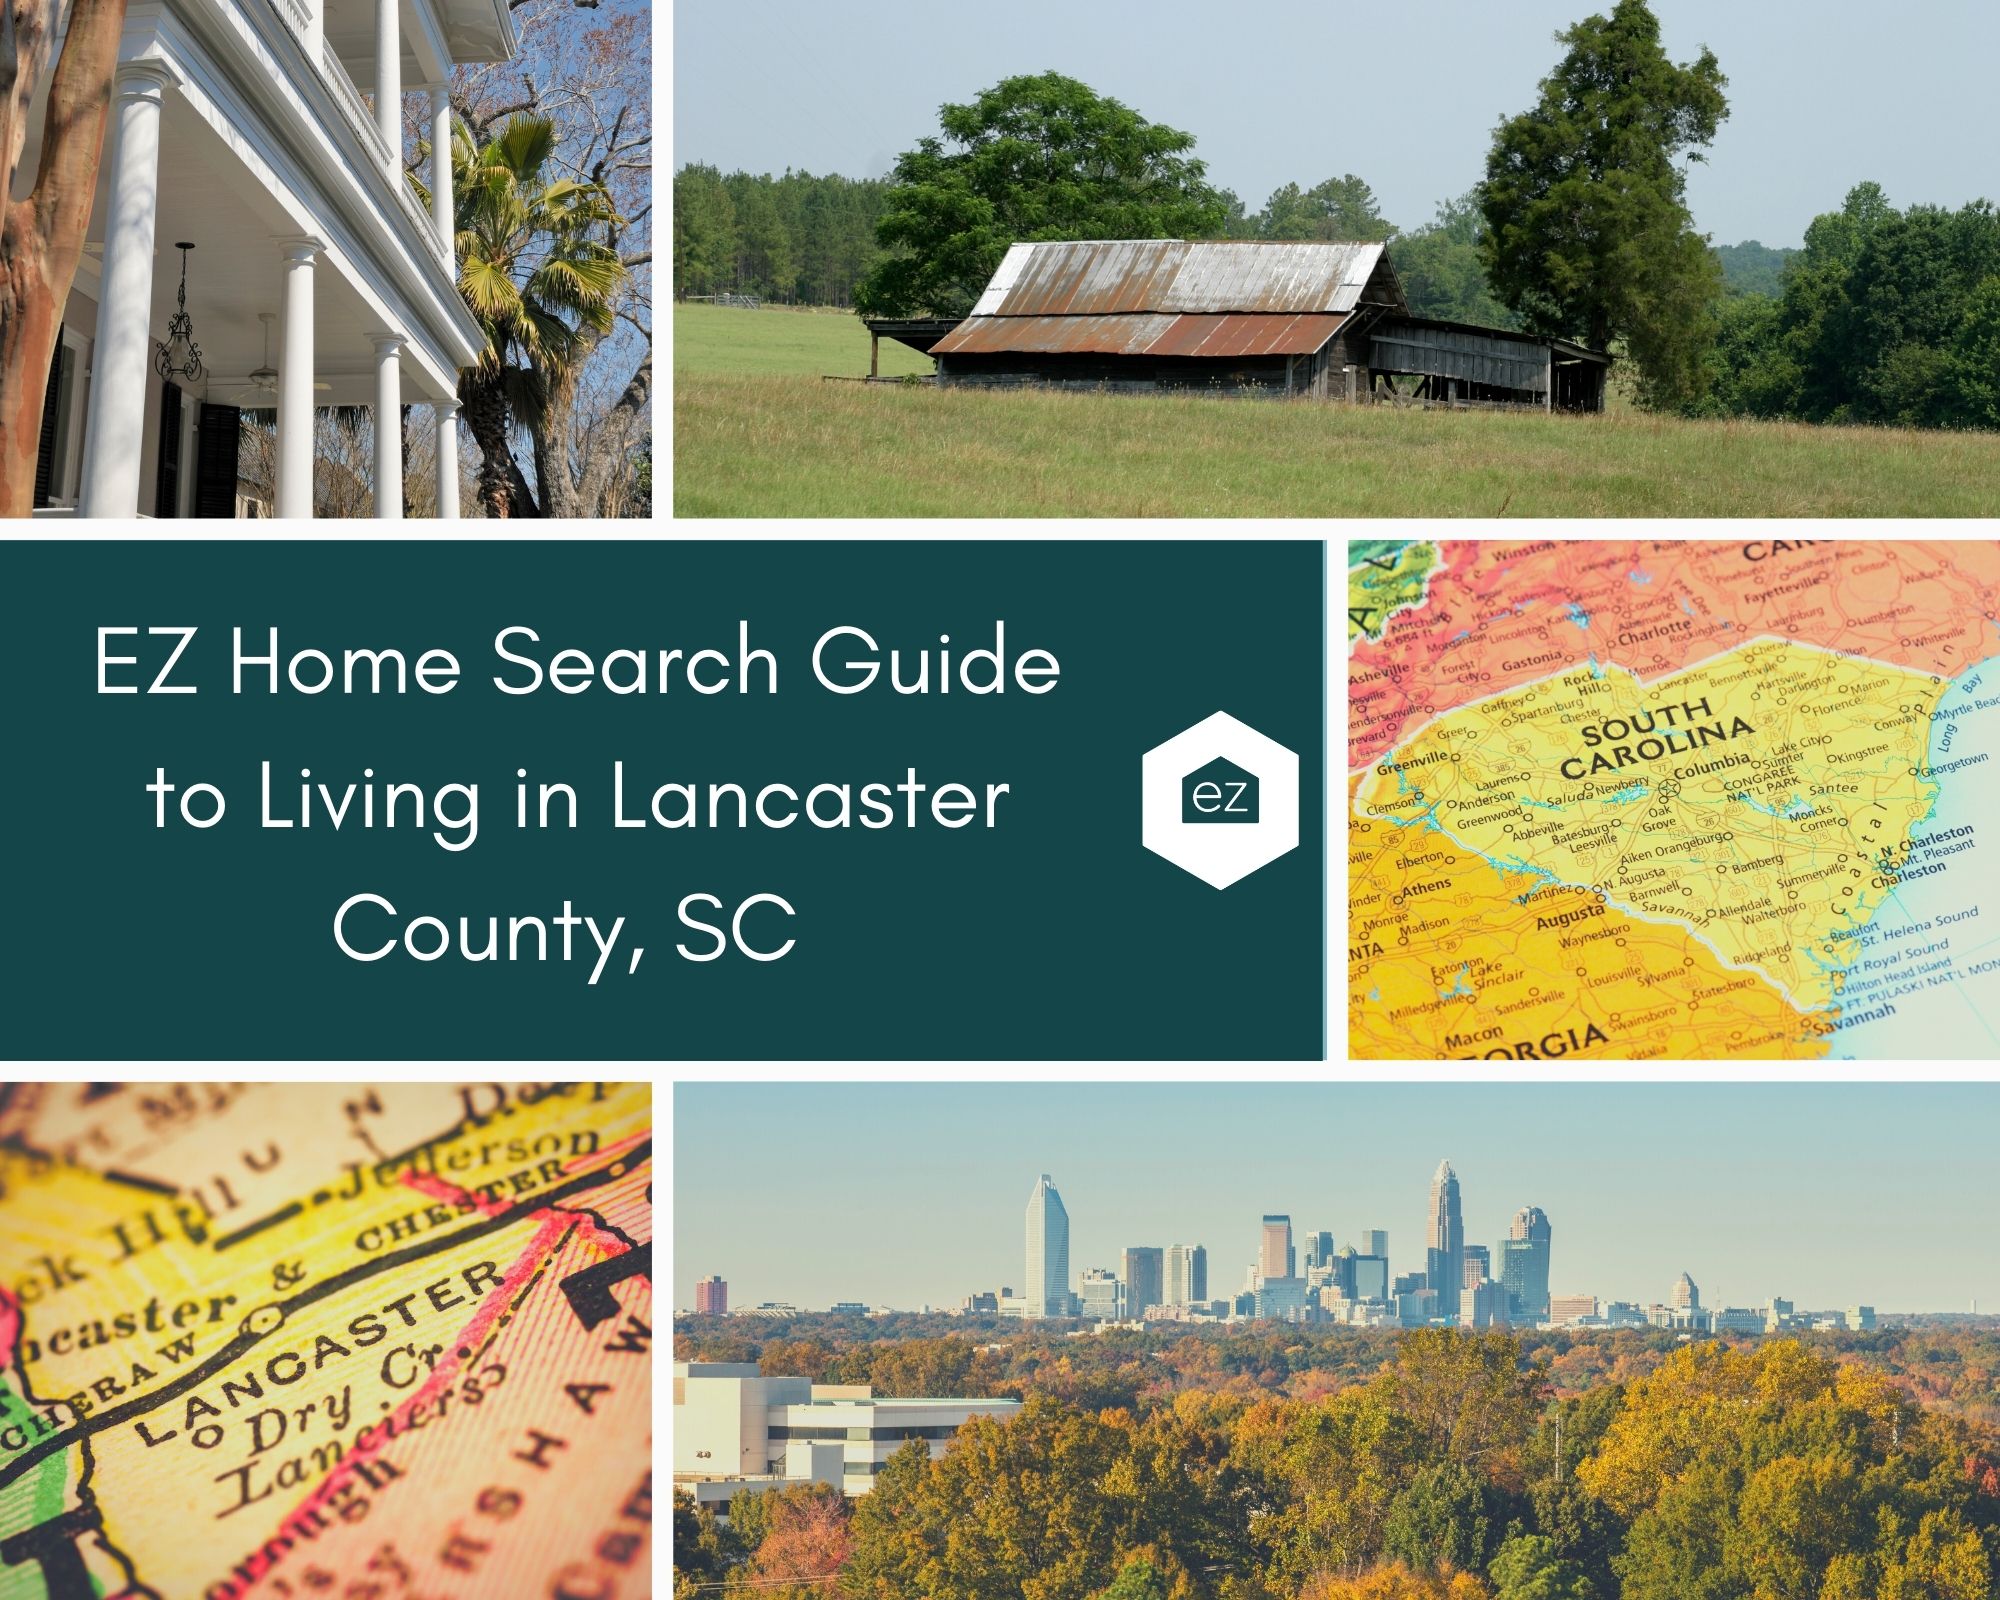 Photos of South Carolina Map, Lancaster South Carolina, and a view of Charlotte, NC